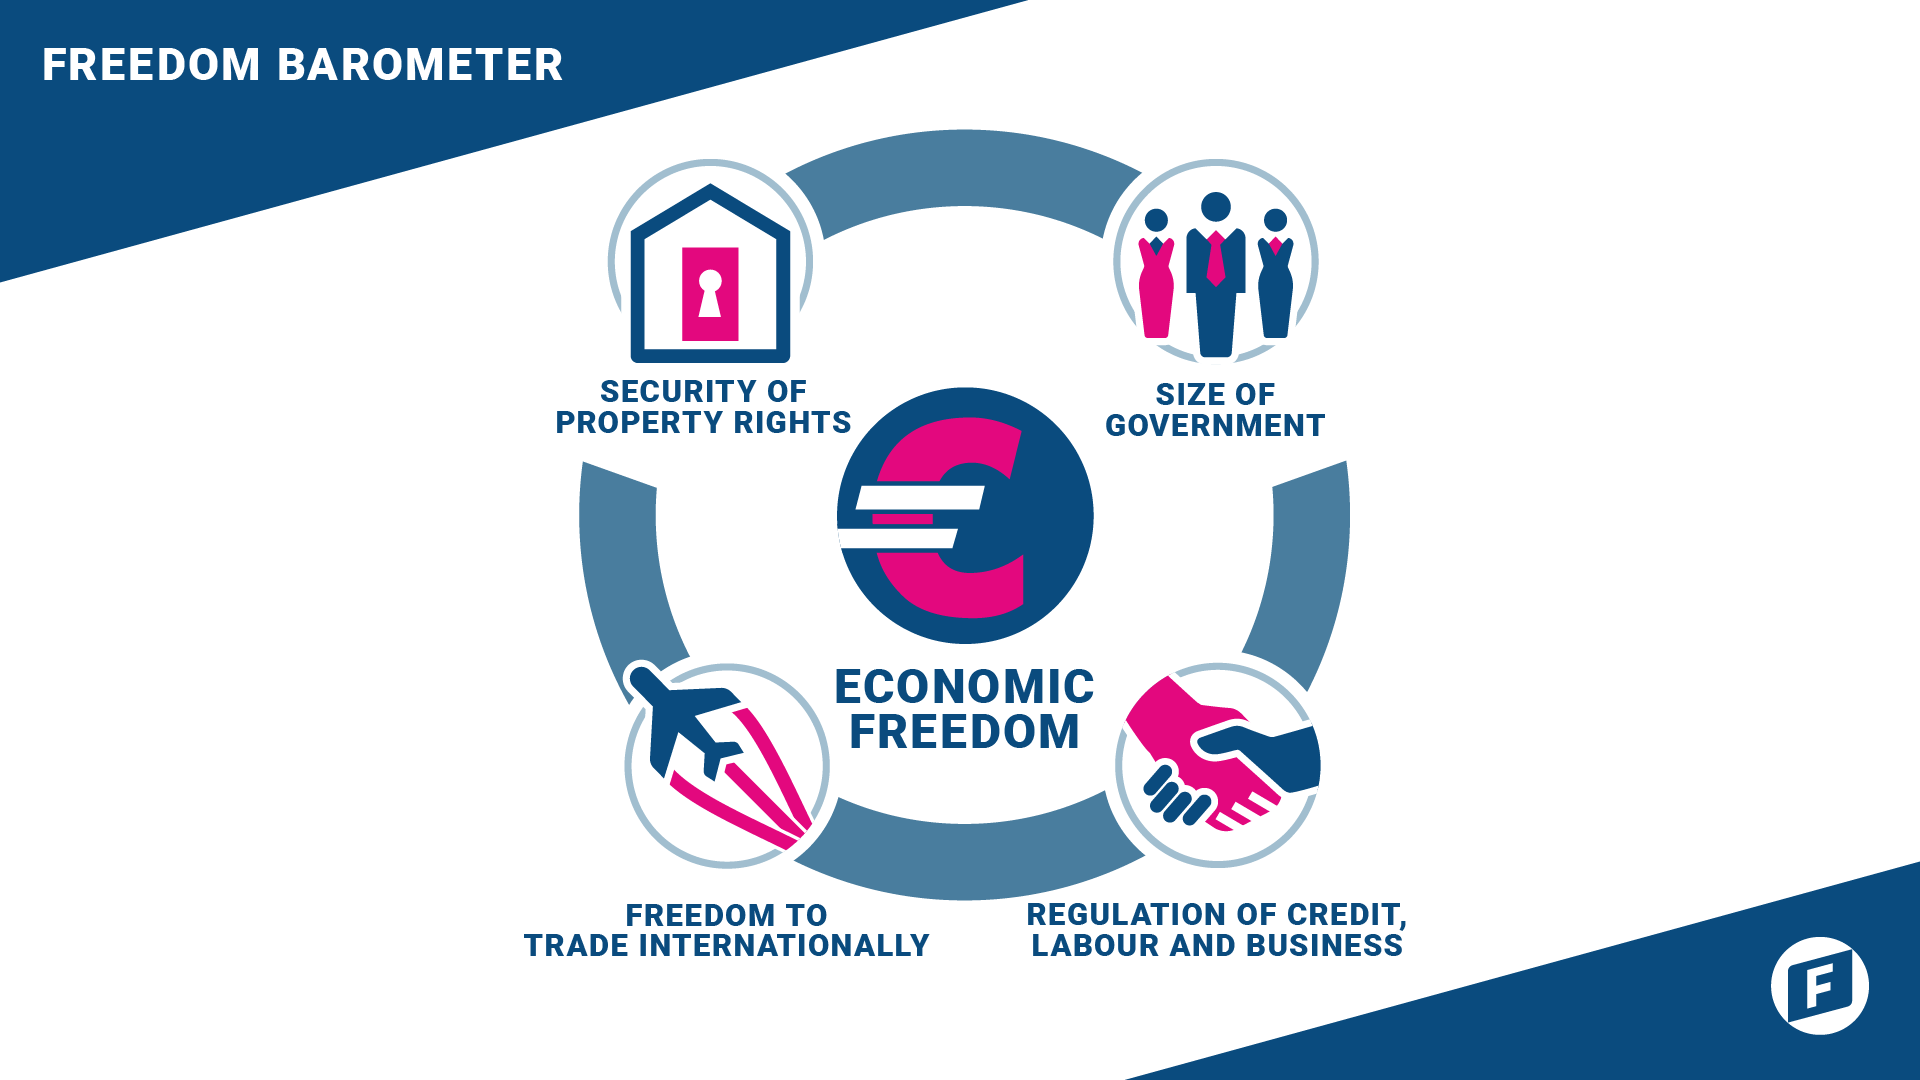 Freedom Barometer - Economic Freedom